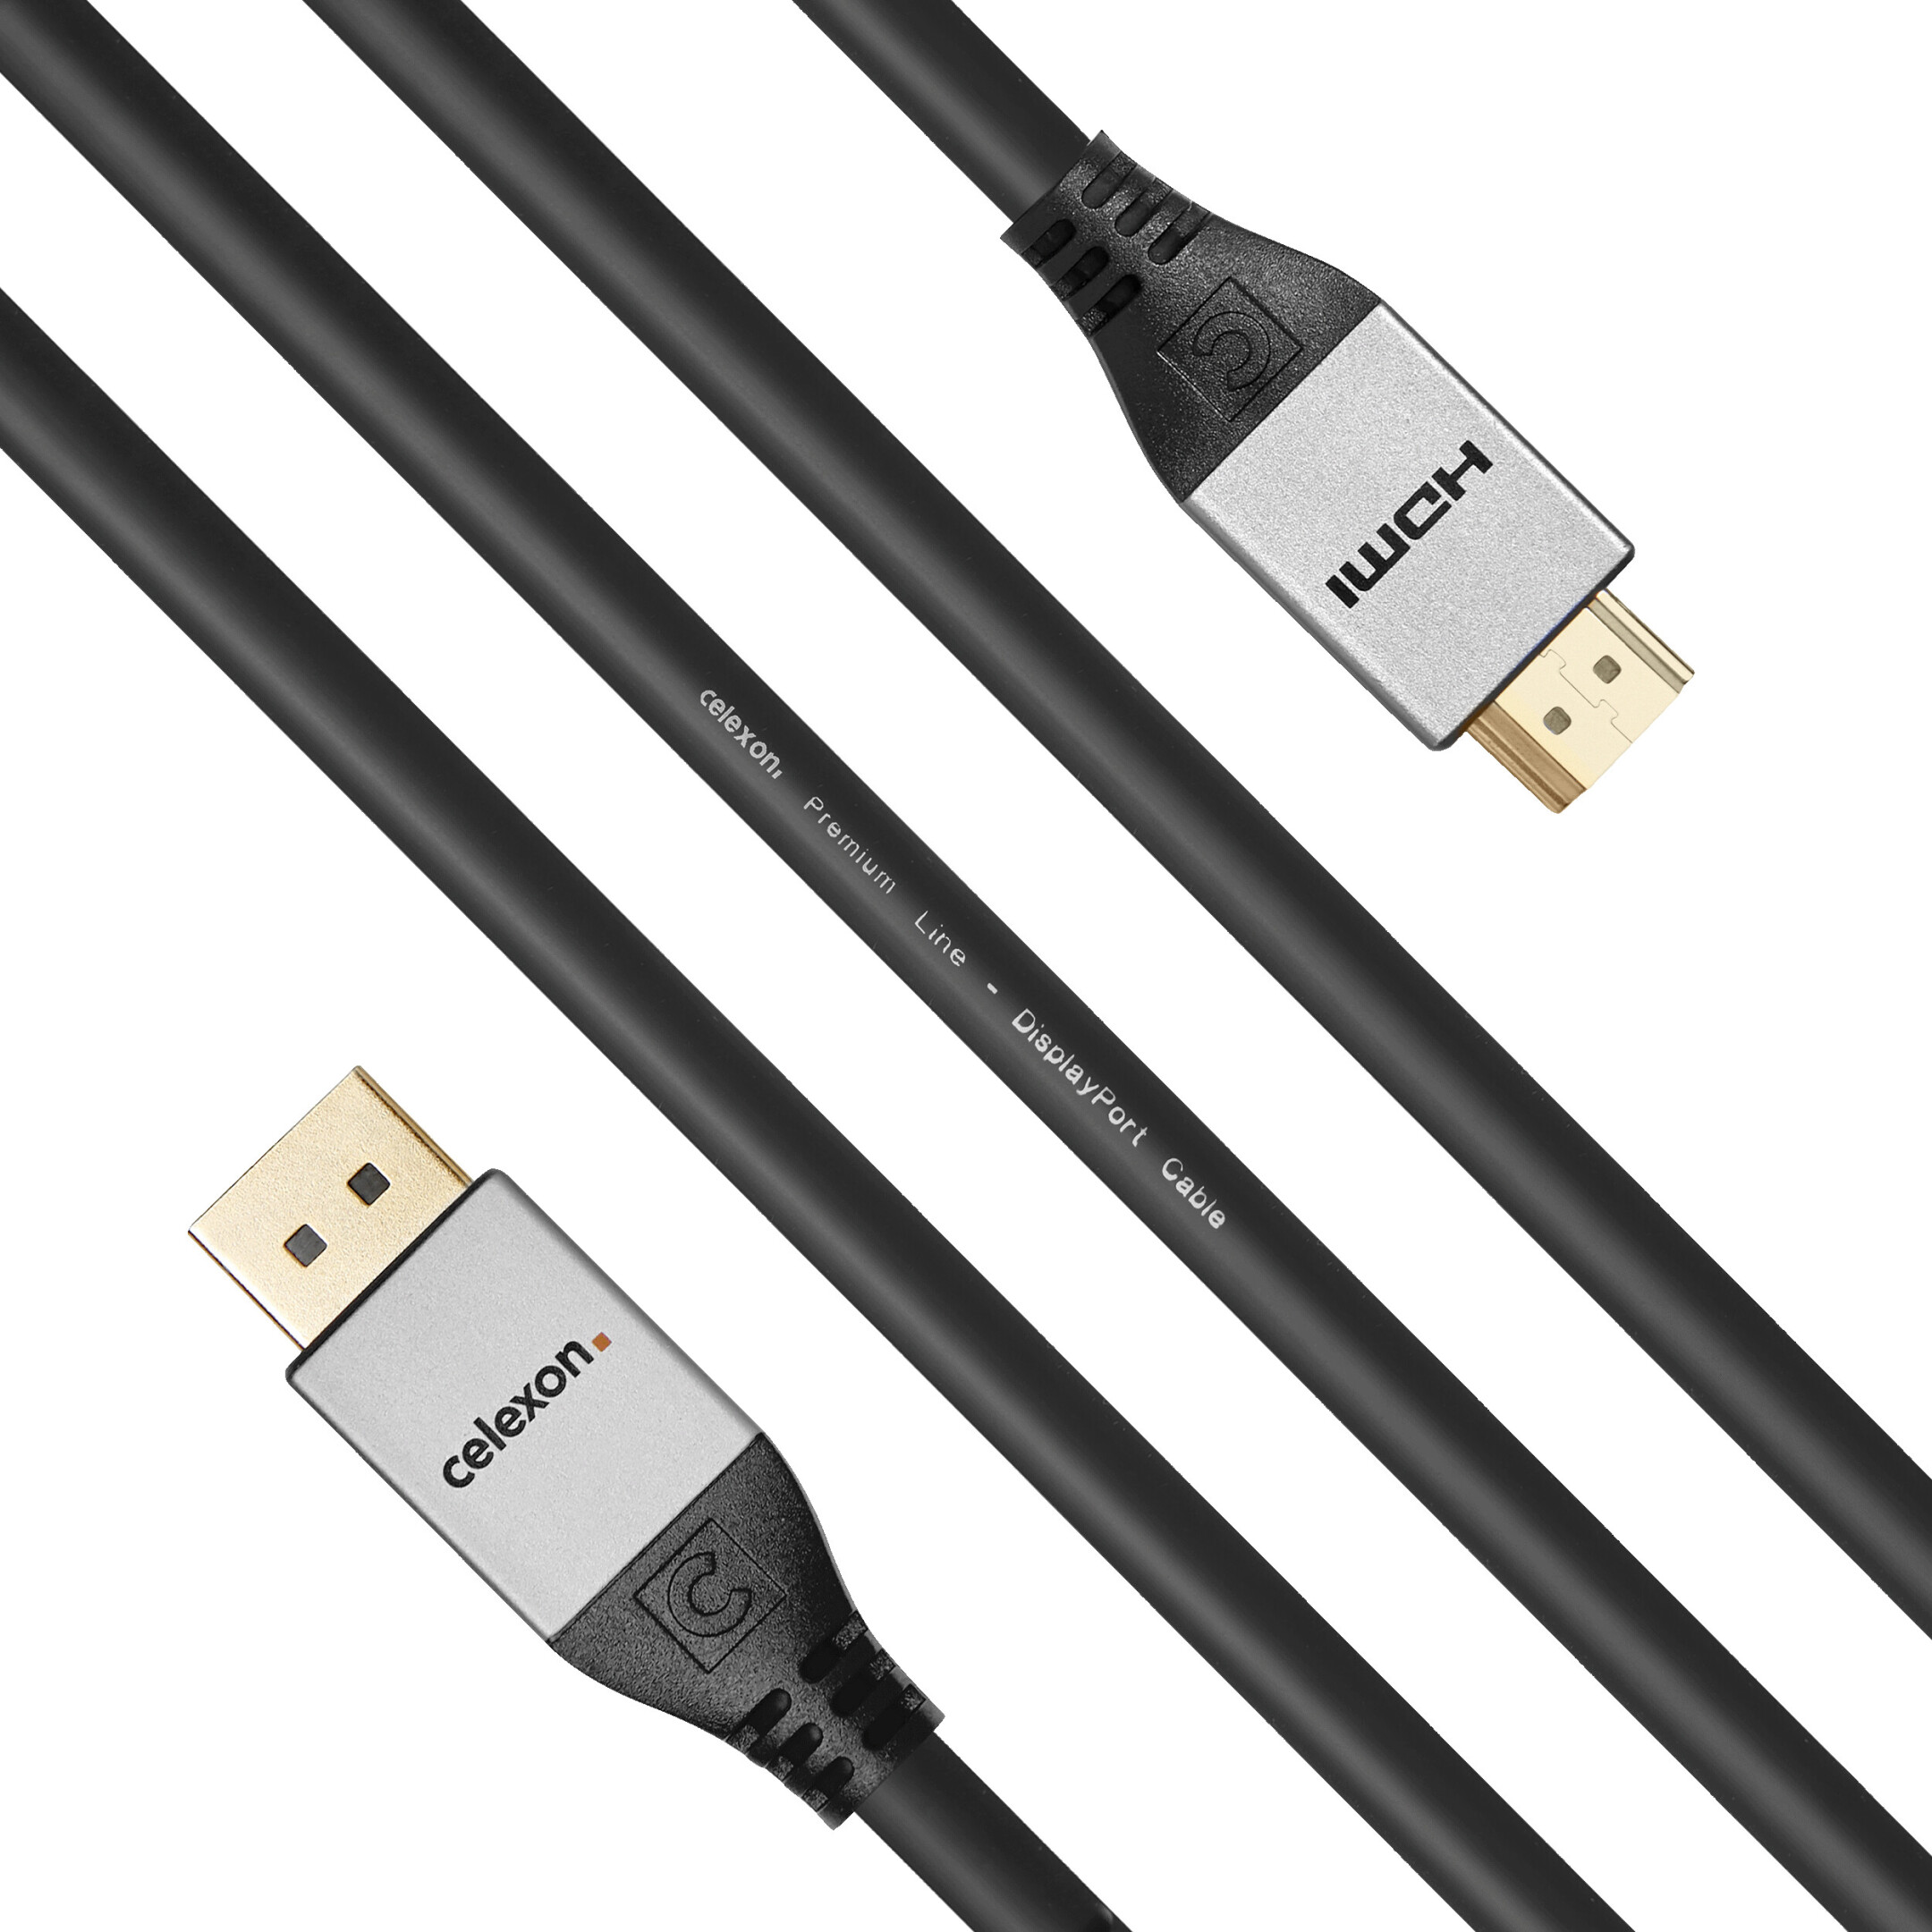 celexon-DisplayPort-naar-HDMI-kabel-4K-2-0-m-Professional